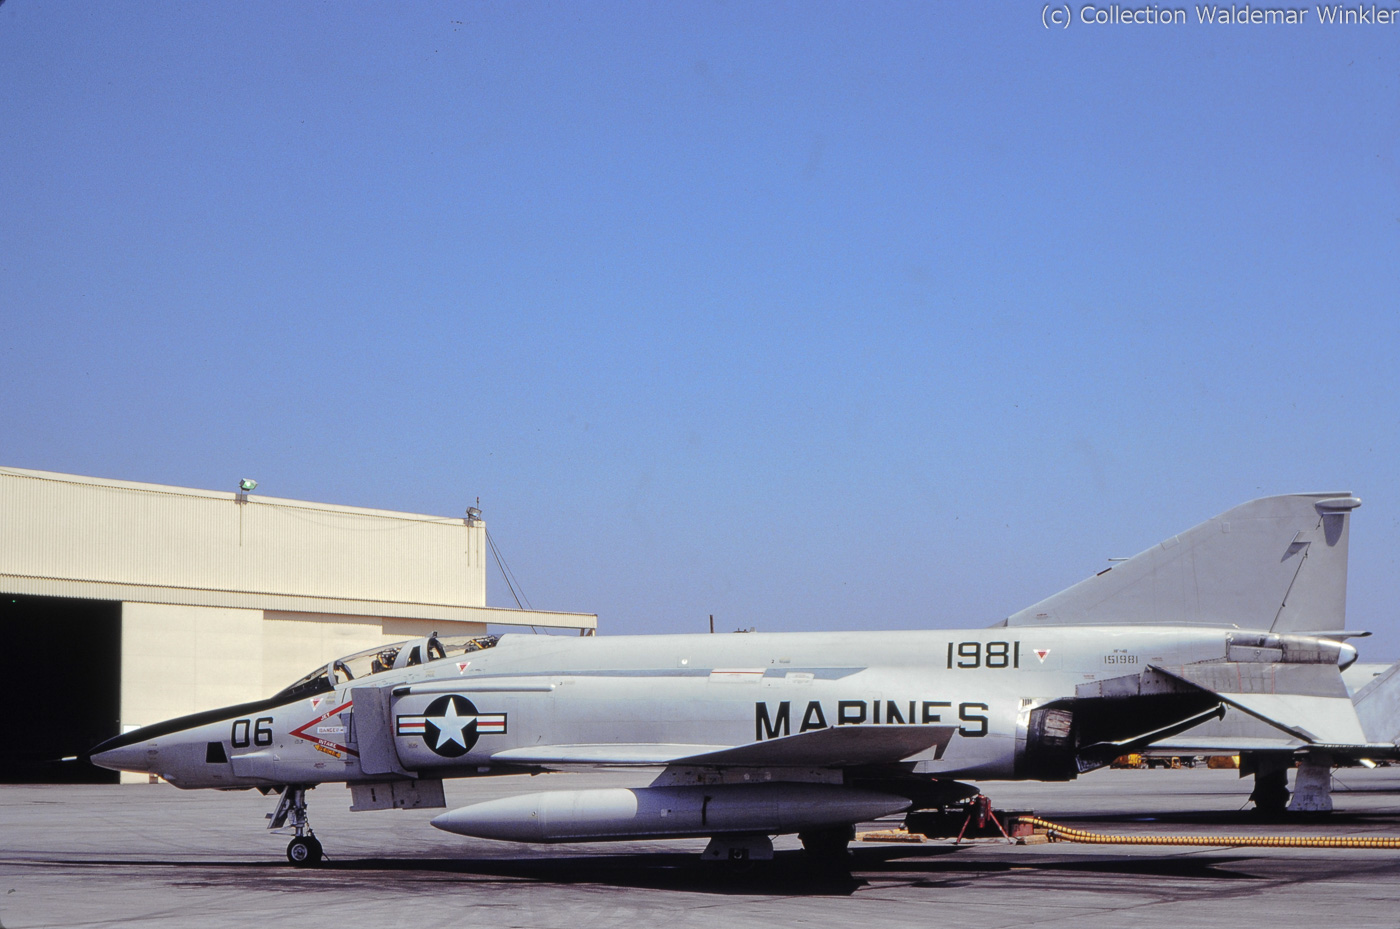 F-4_Phantom_II_DSC_2902.jpg